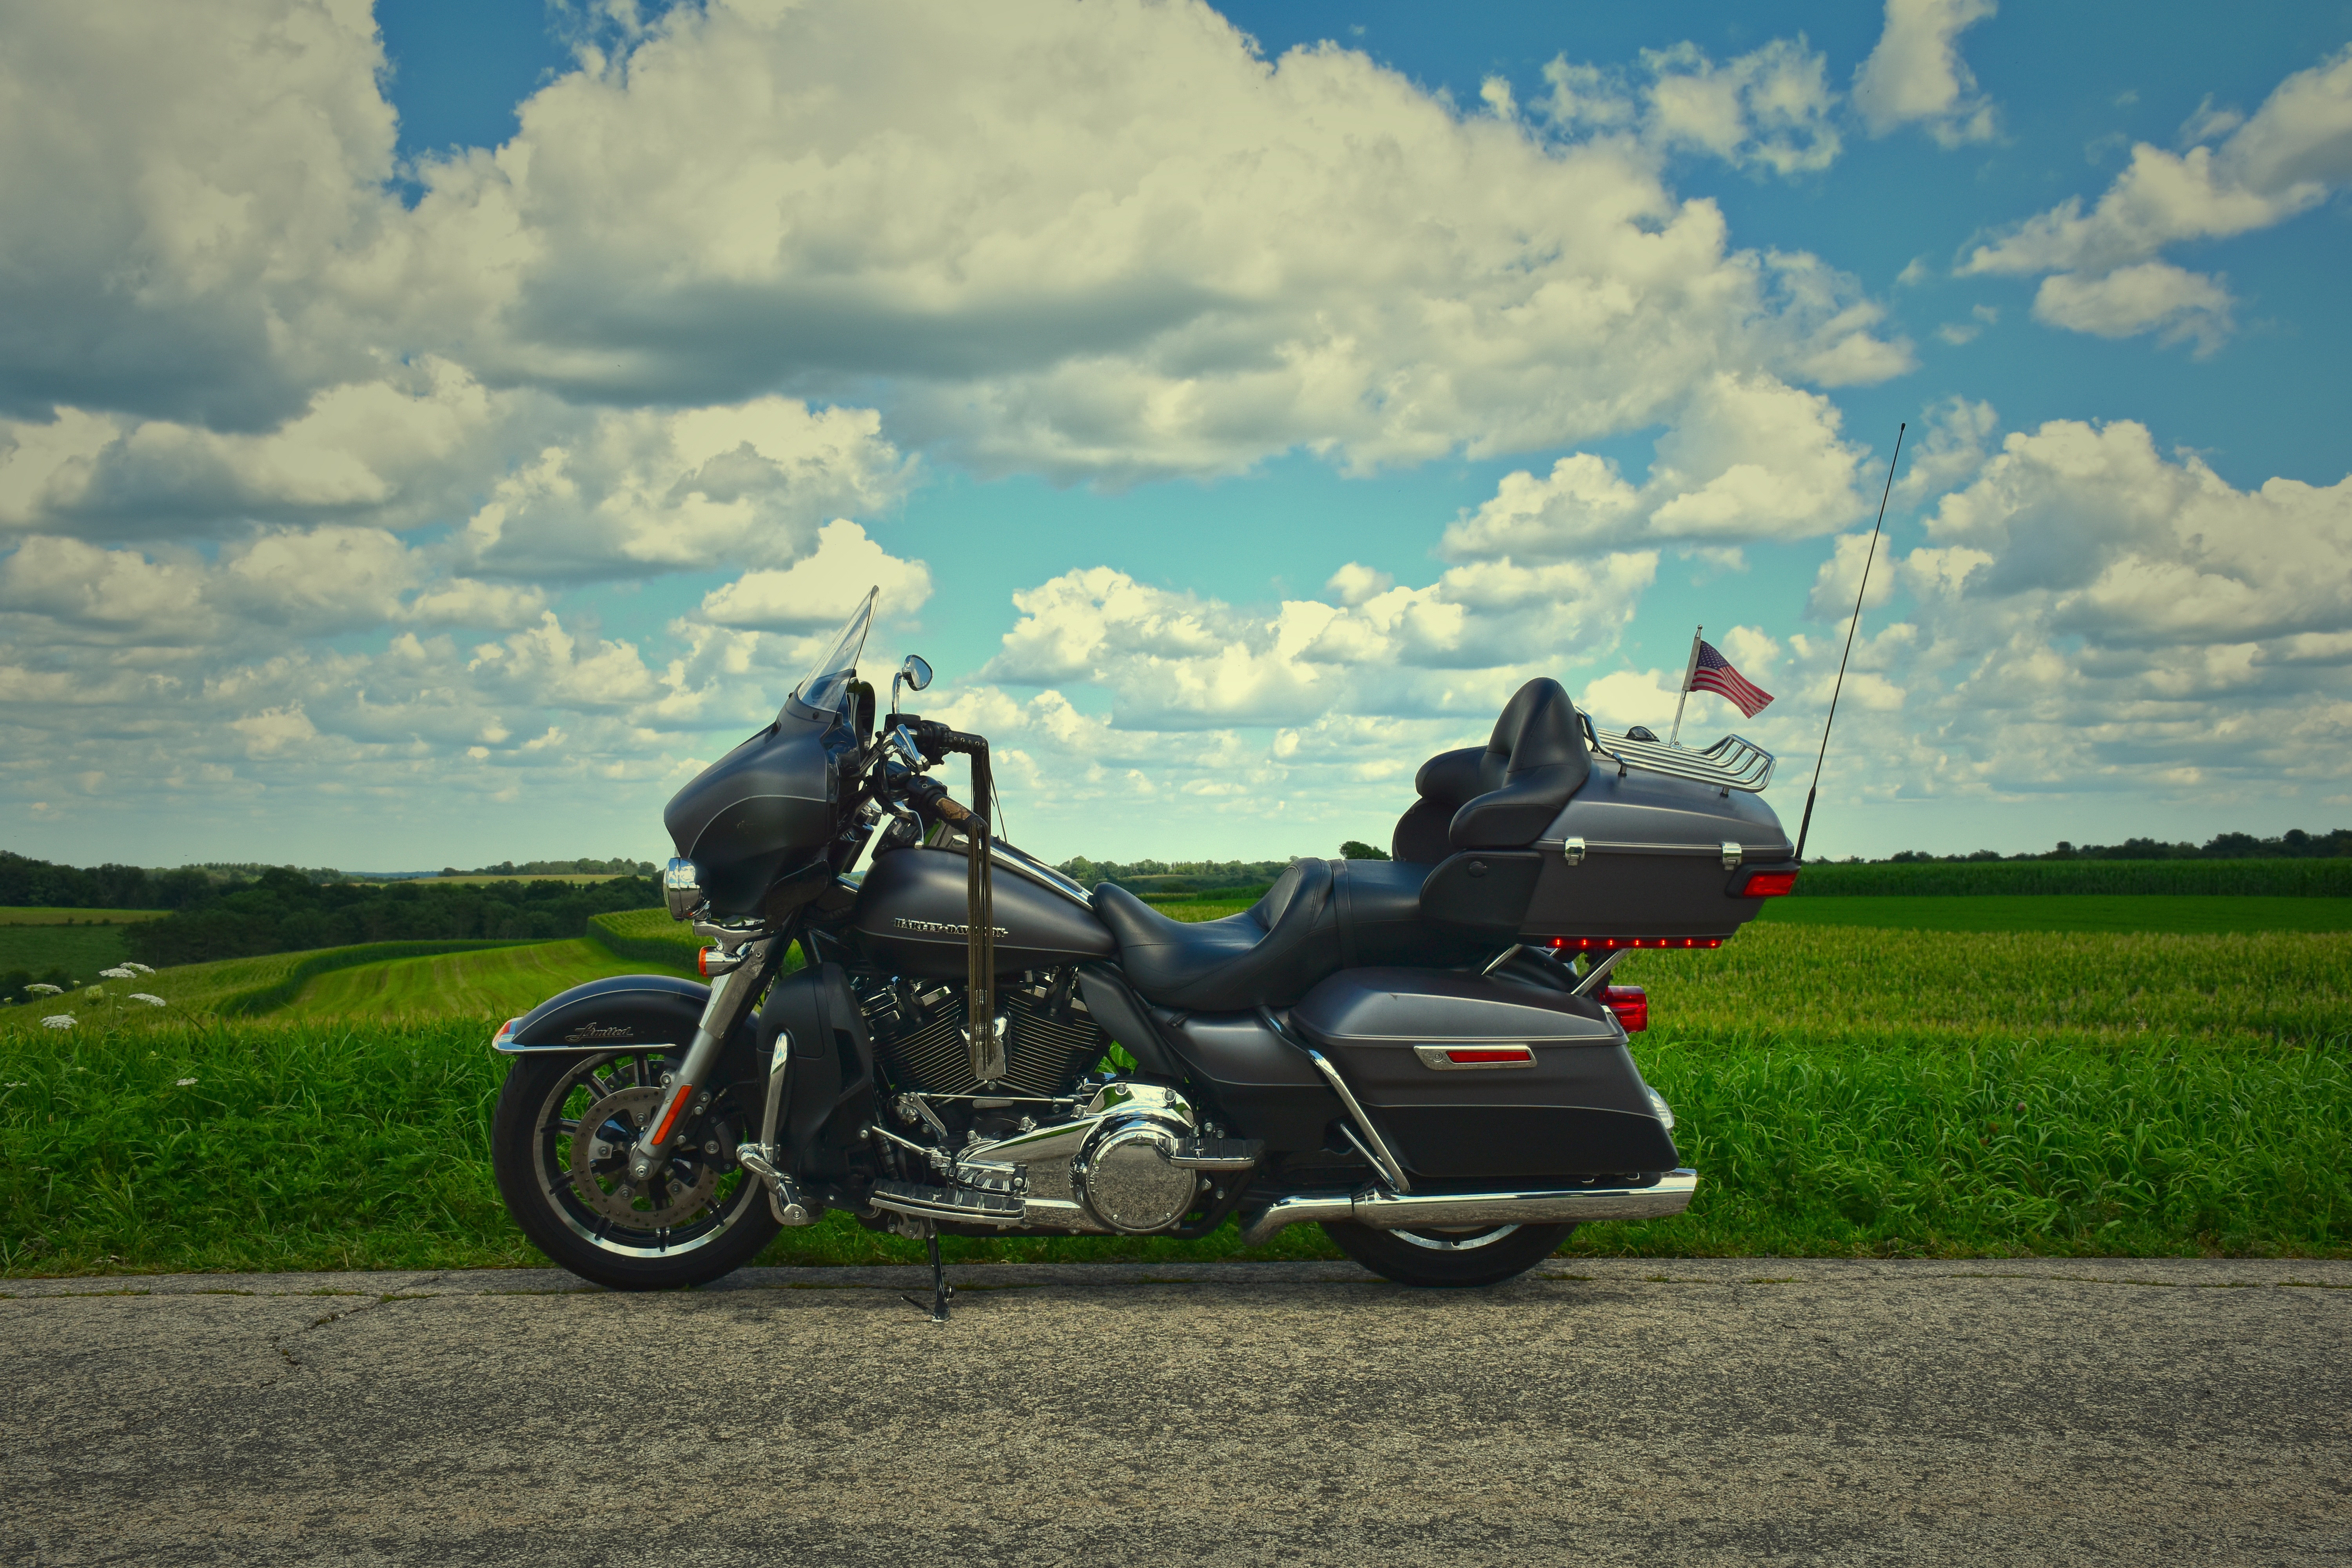 clouds, motorcycles, road, journey, motorcycle, bike, harley davidson